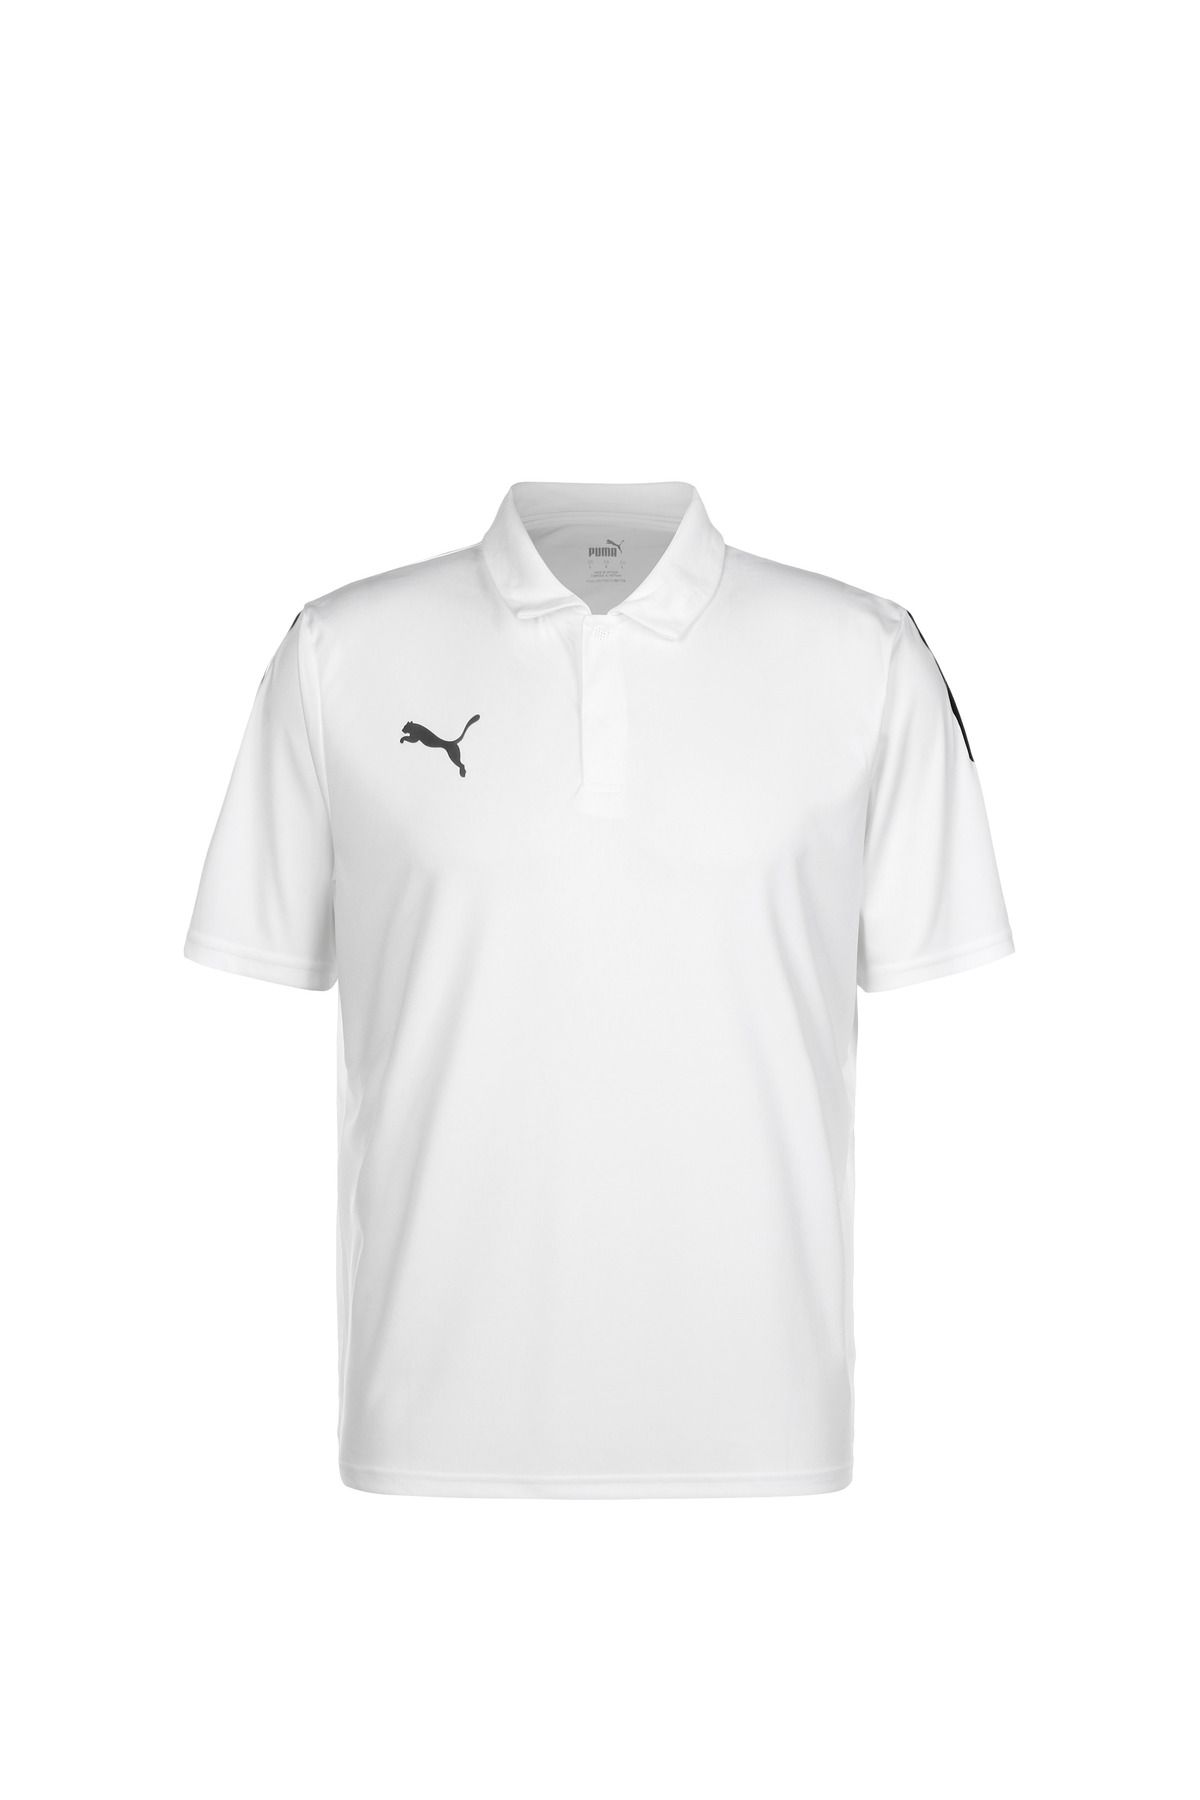 Puma Poloshirt - Trendyol - Regular Weiß - Fit